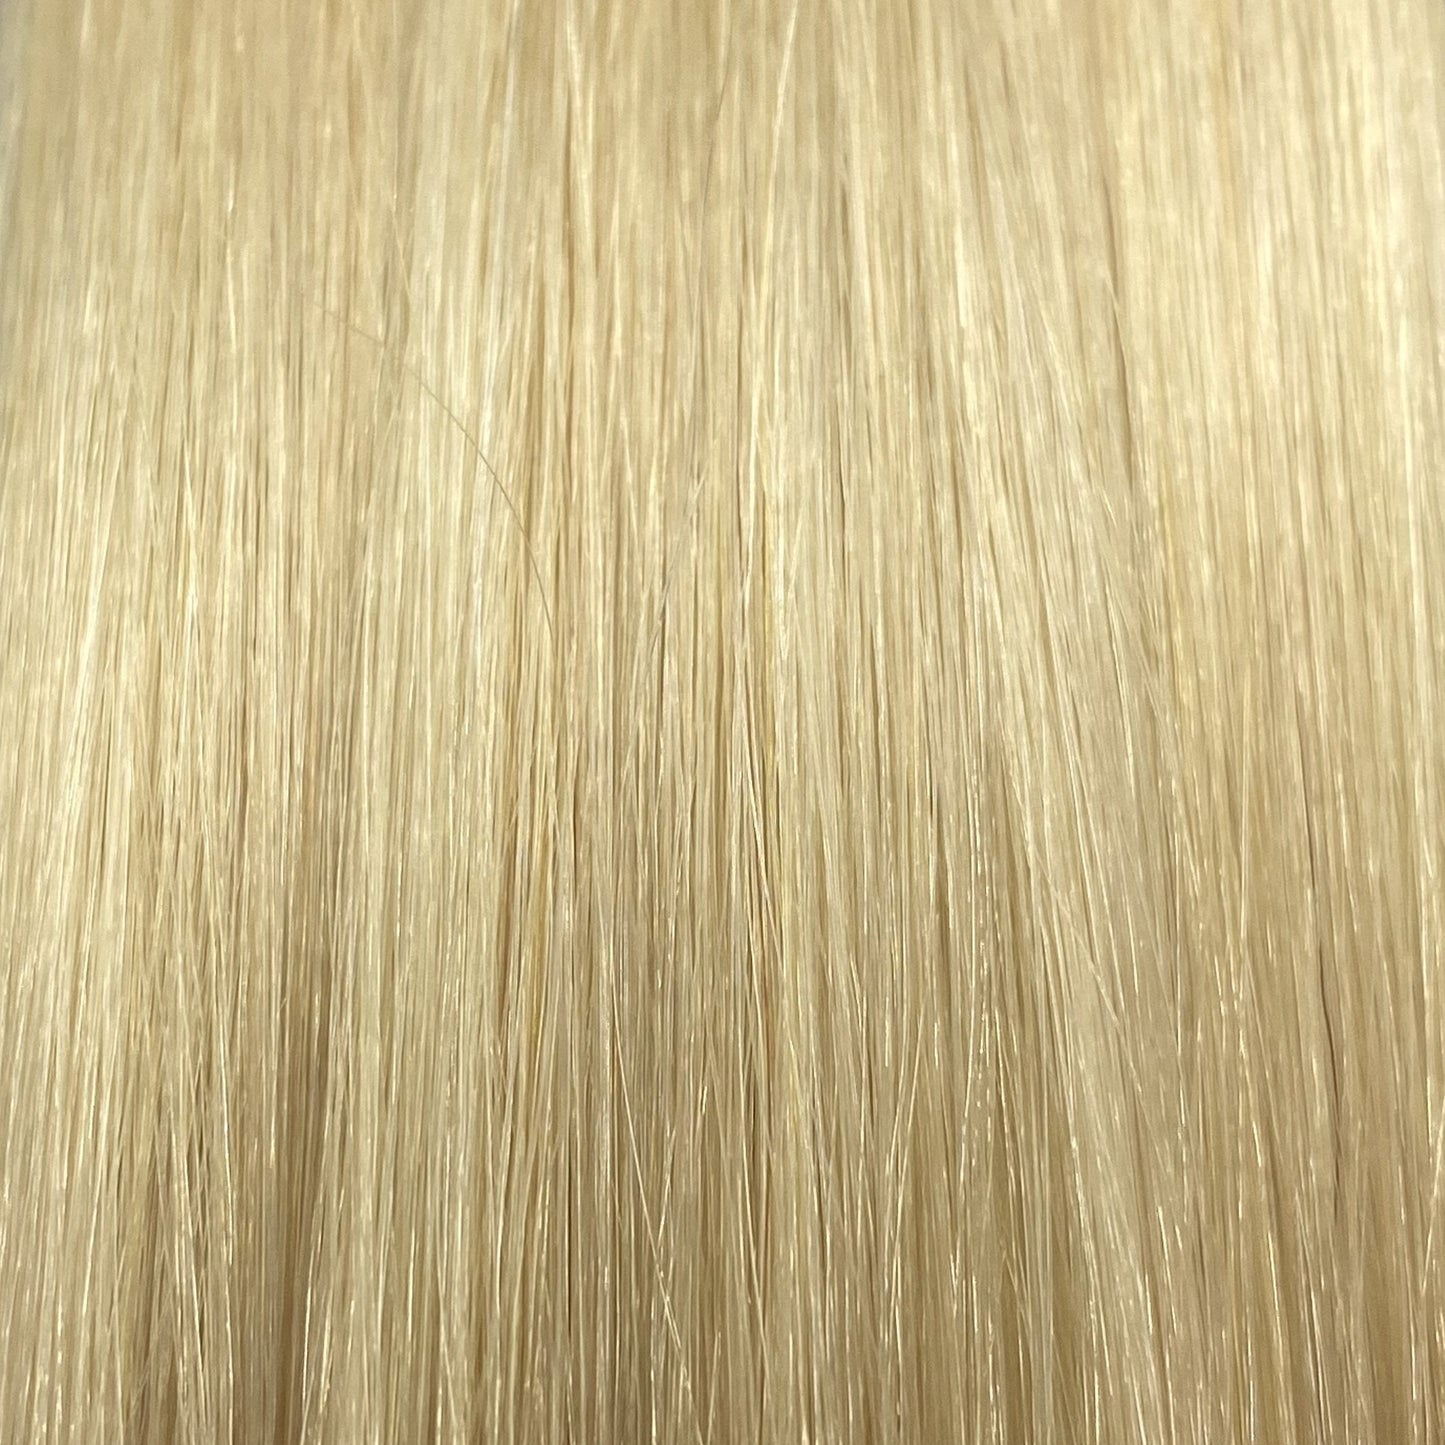 Fusion hair extensions #1003 - 50cm/20 inches - Scandinavian Blonde Fusion Euro So Cap 